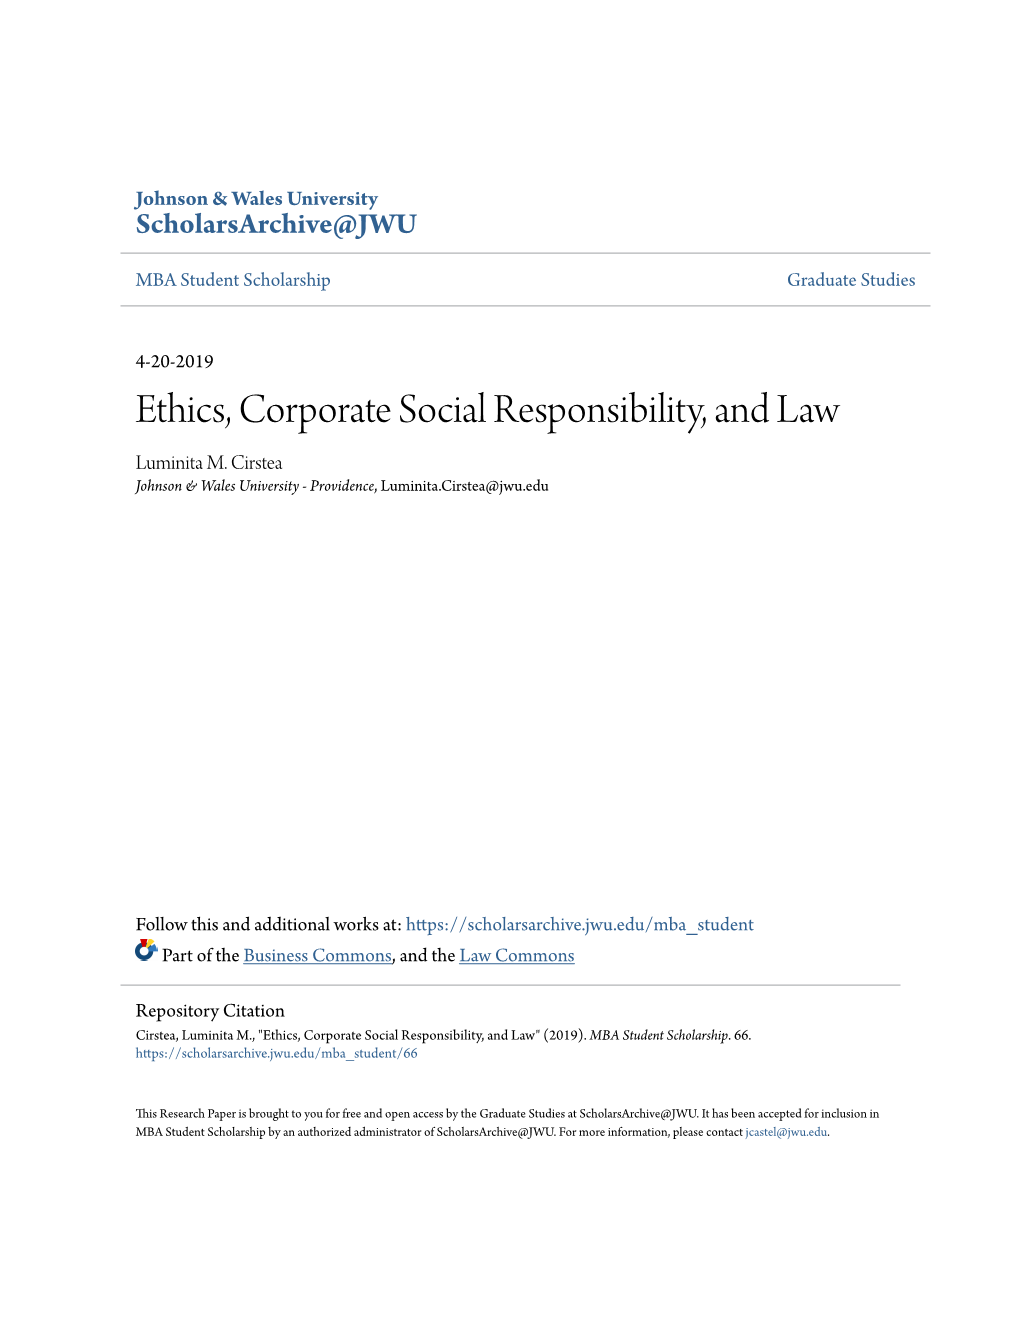 Ethics, Corporate Social Responsibility, and Law Luminita M